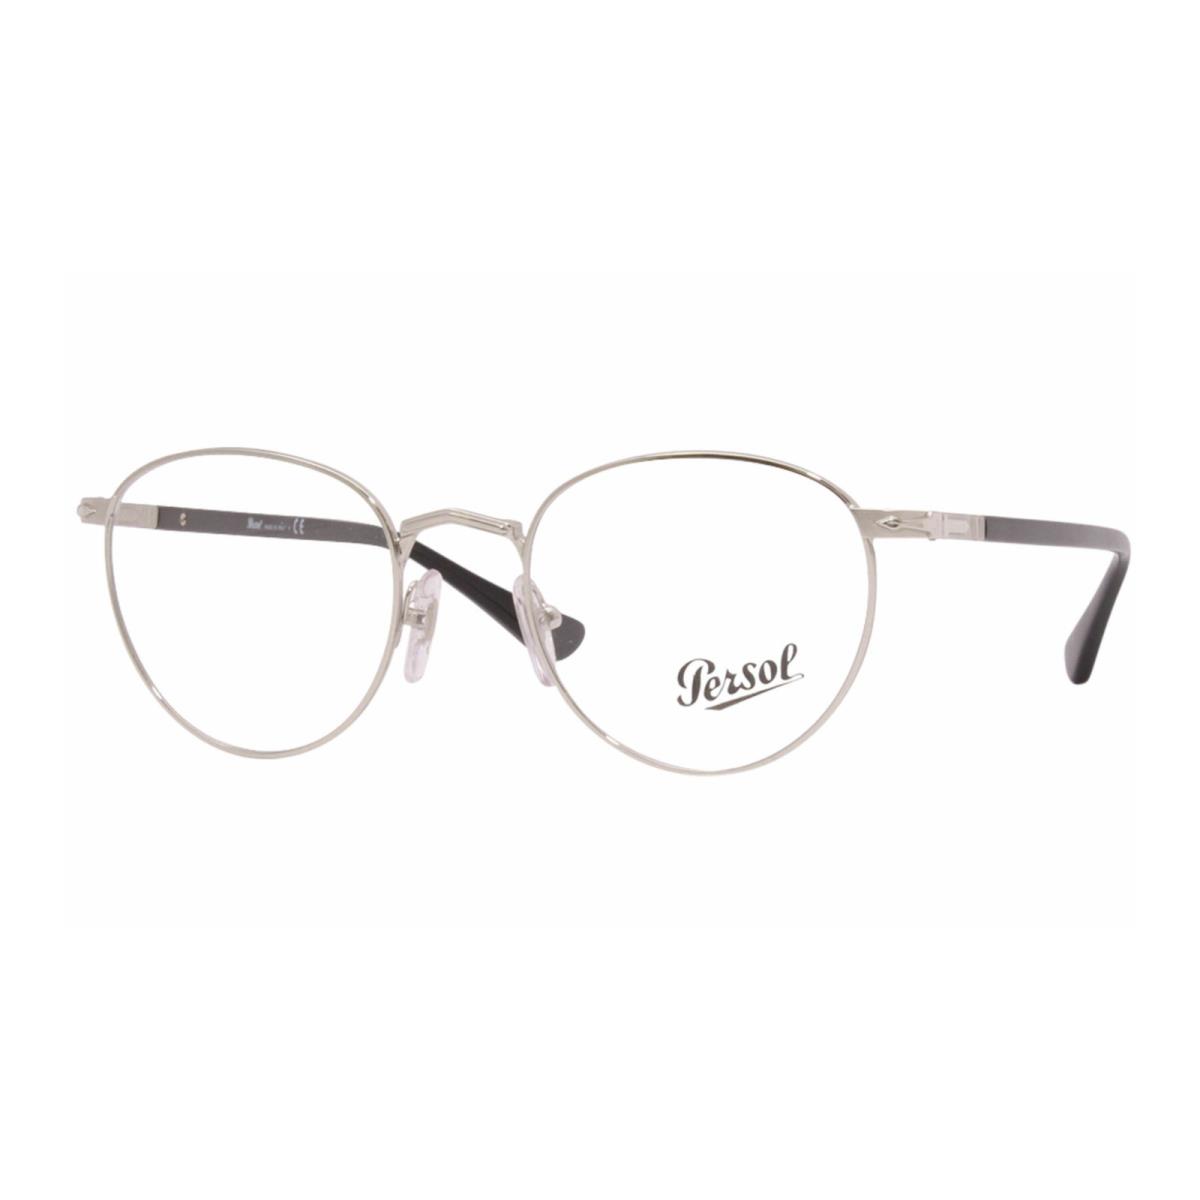 Persol Rx-able Eyeglasses 2478-V 518 50-20 145 Silver Black Round Frames